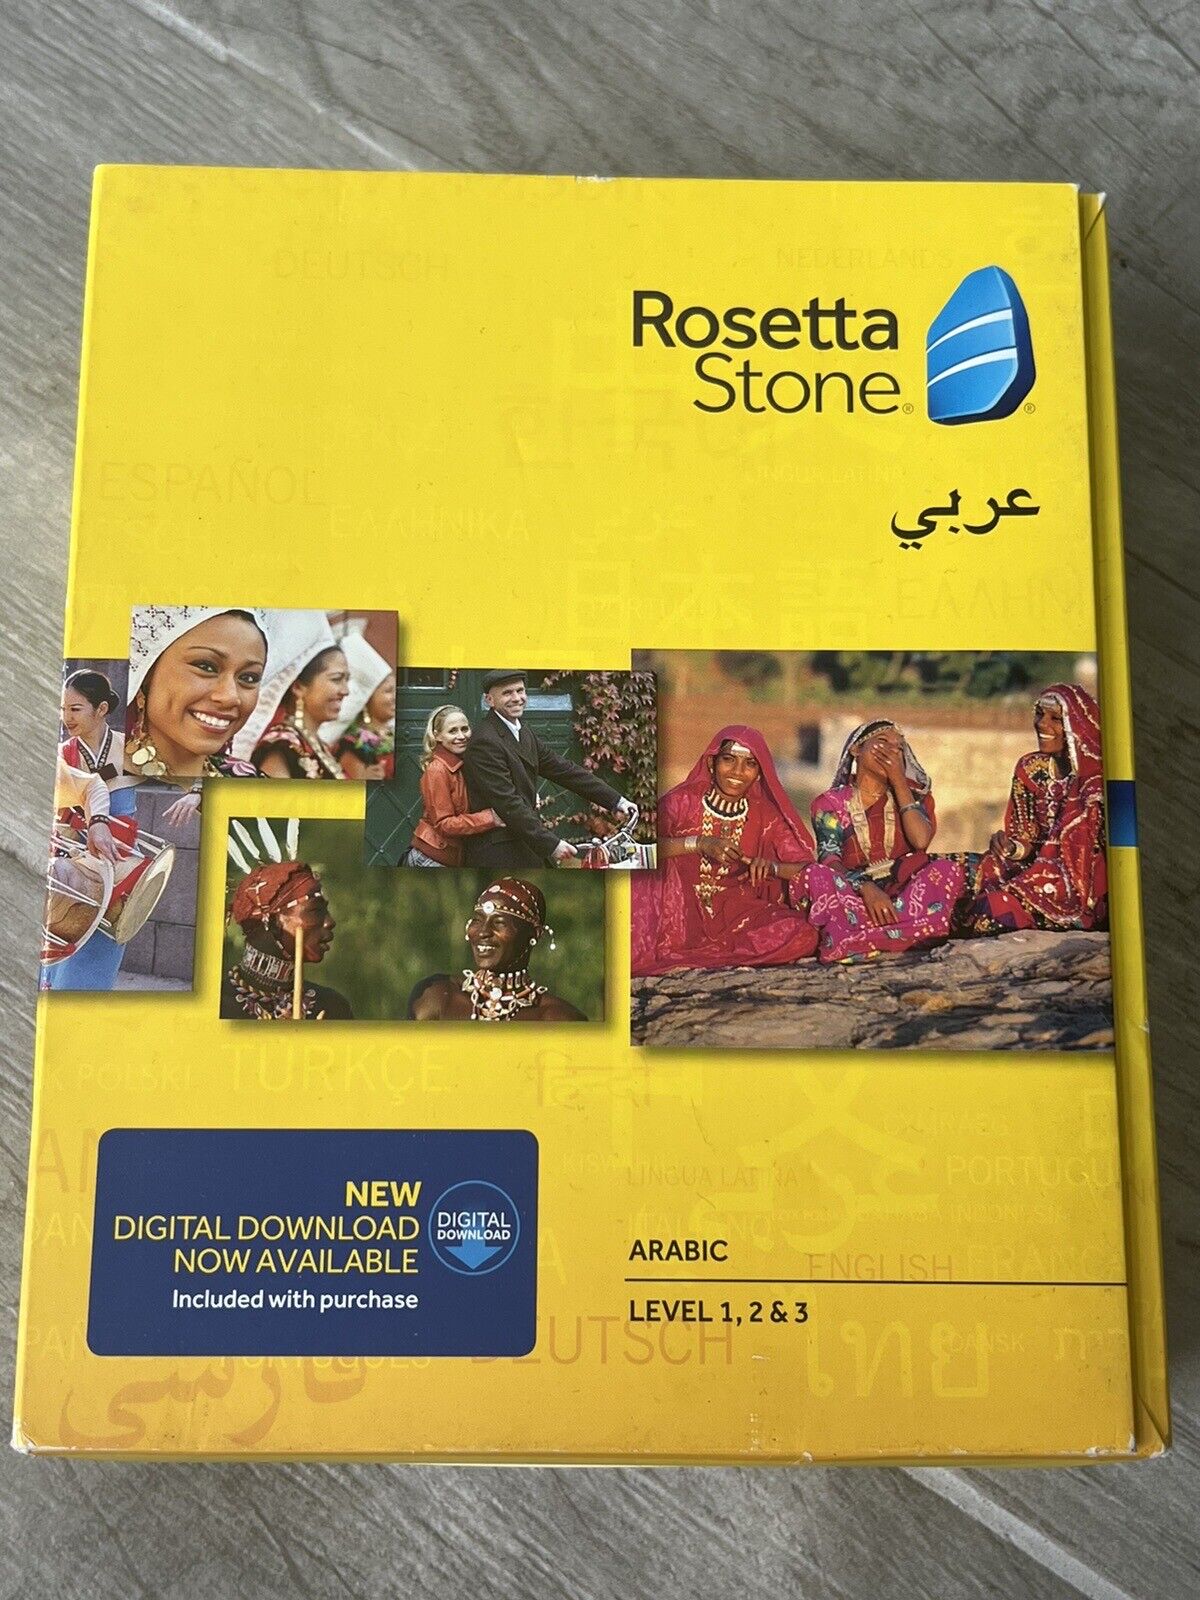 Rosetta Stone Arabic Level 1, 2, 3 Includes Key Card